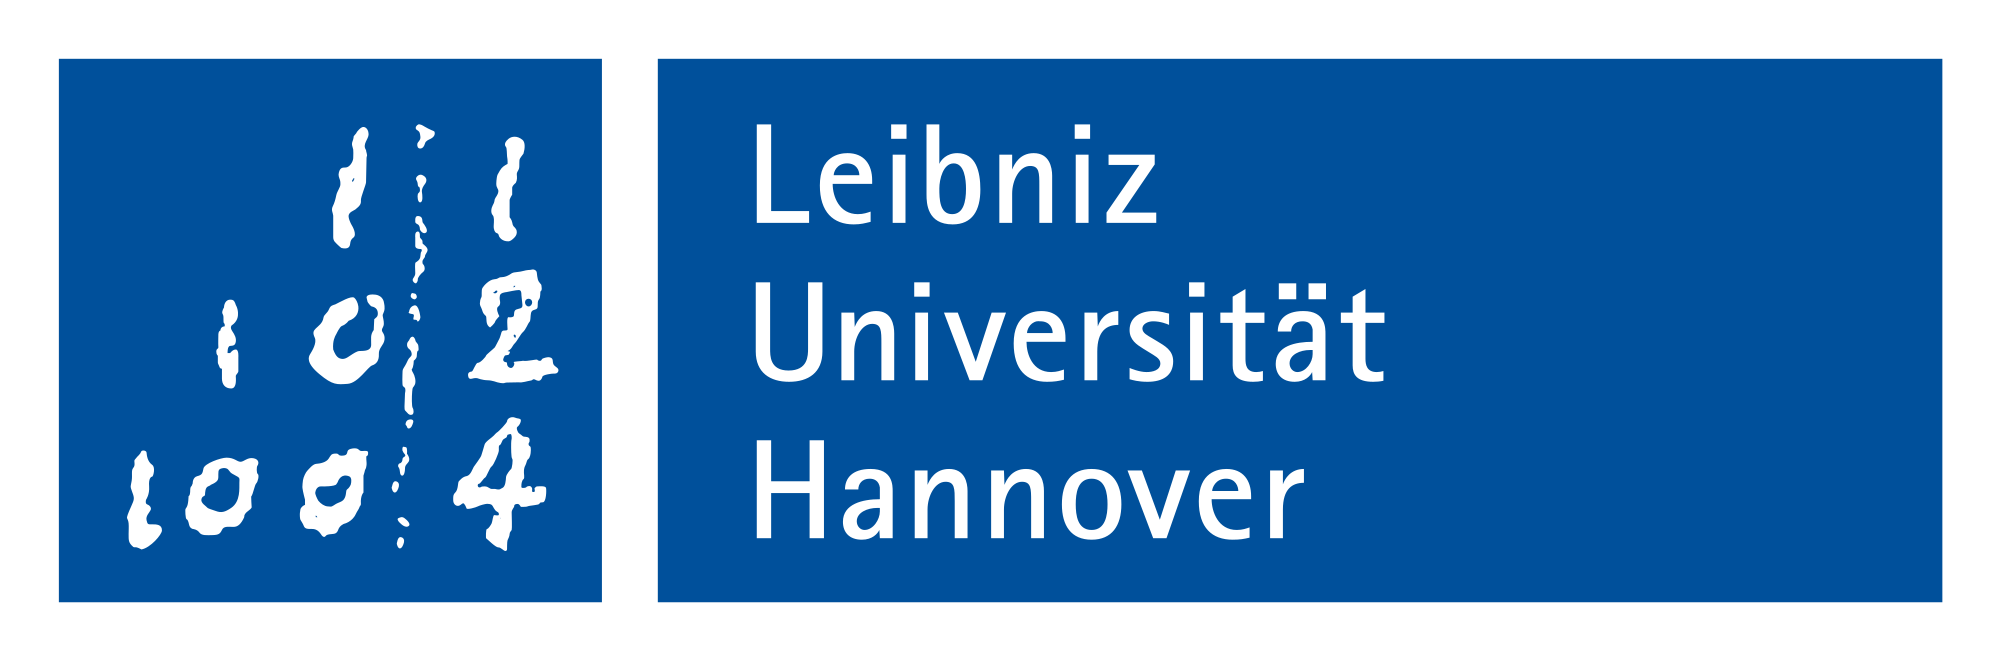 Leibniz Universität logo